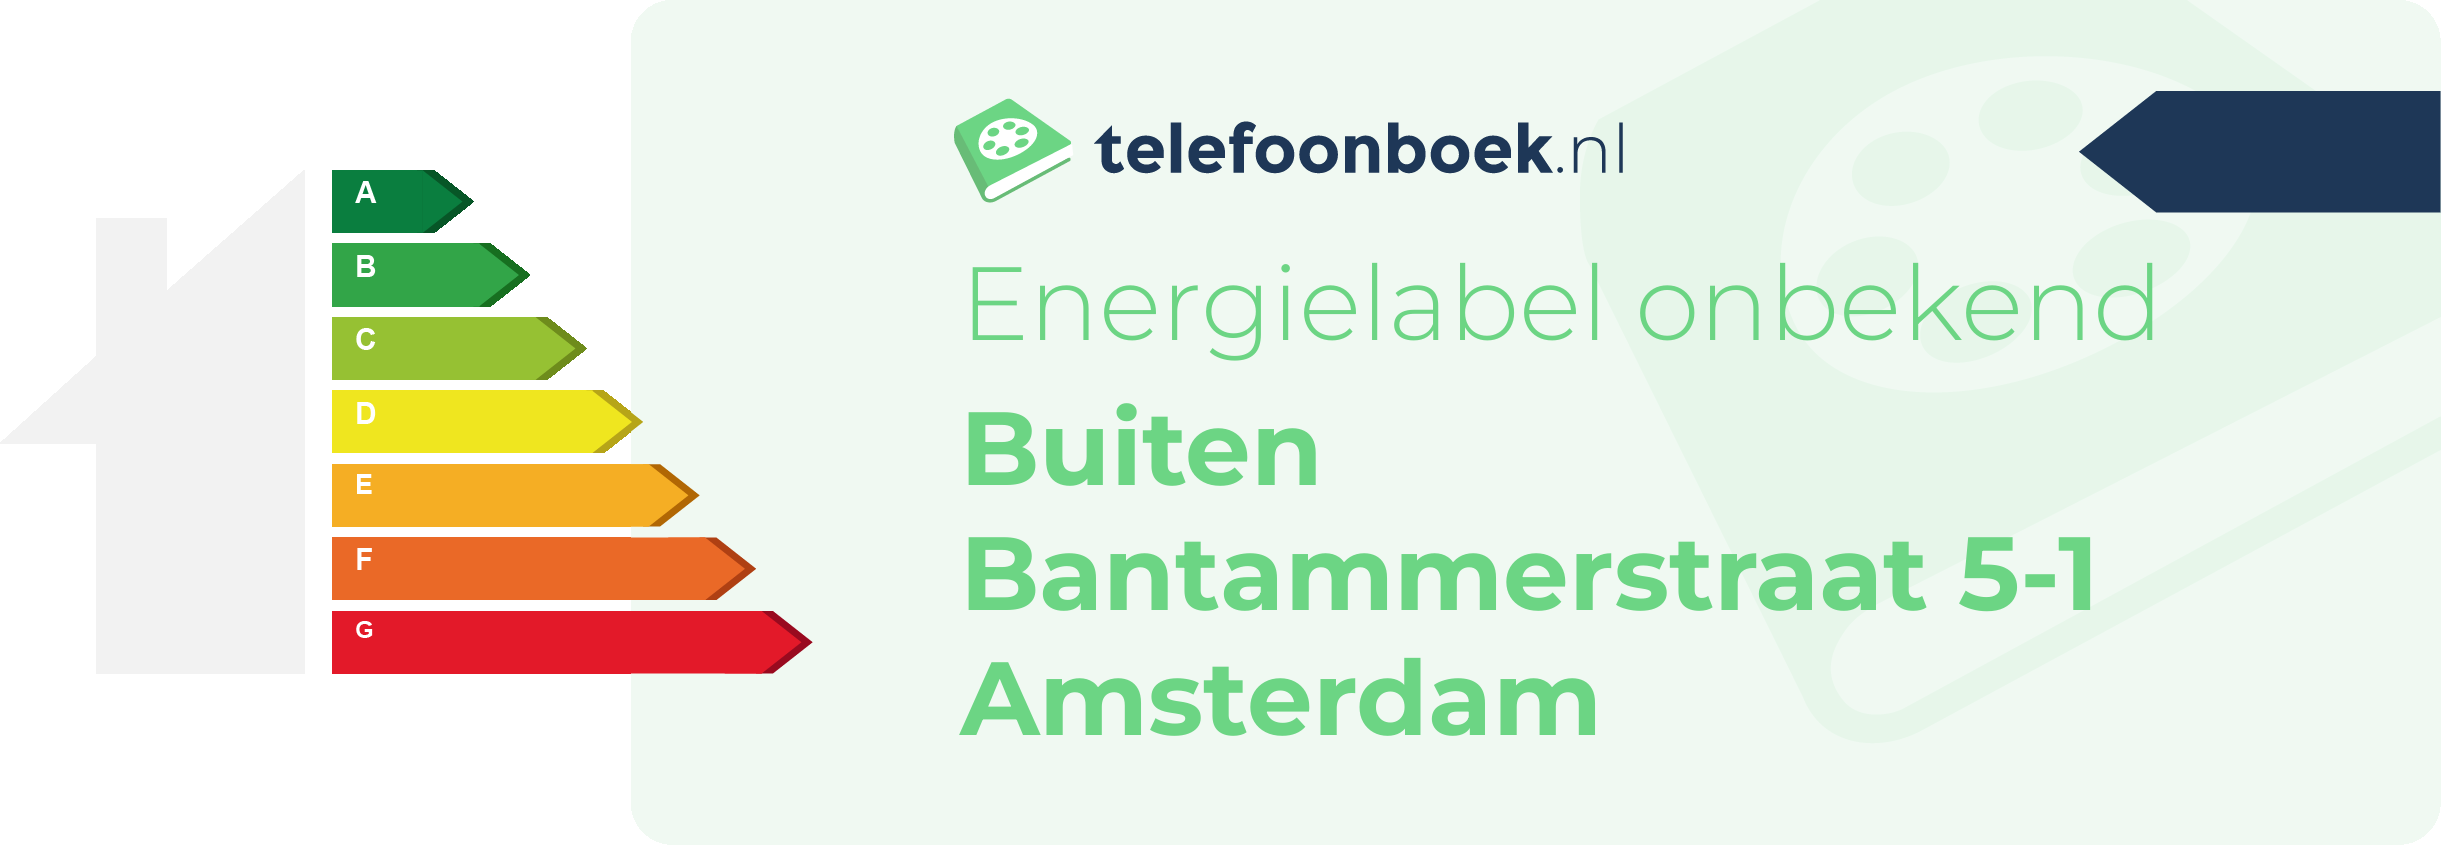 Energielabel Buiten Bantammerstraat 5-1 Amsterdam